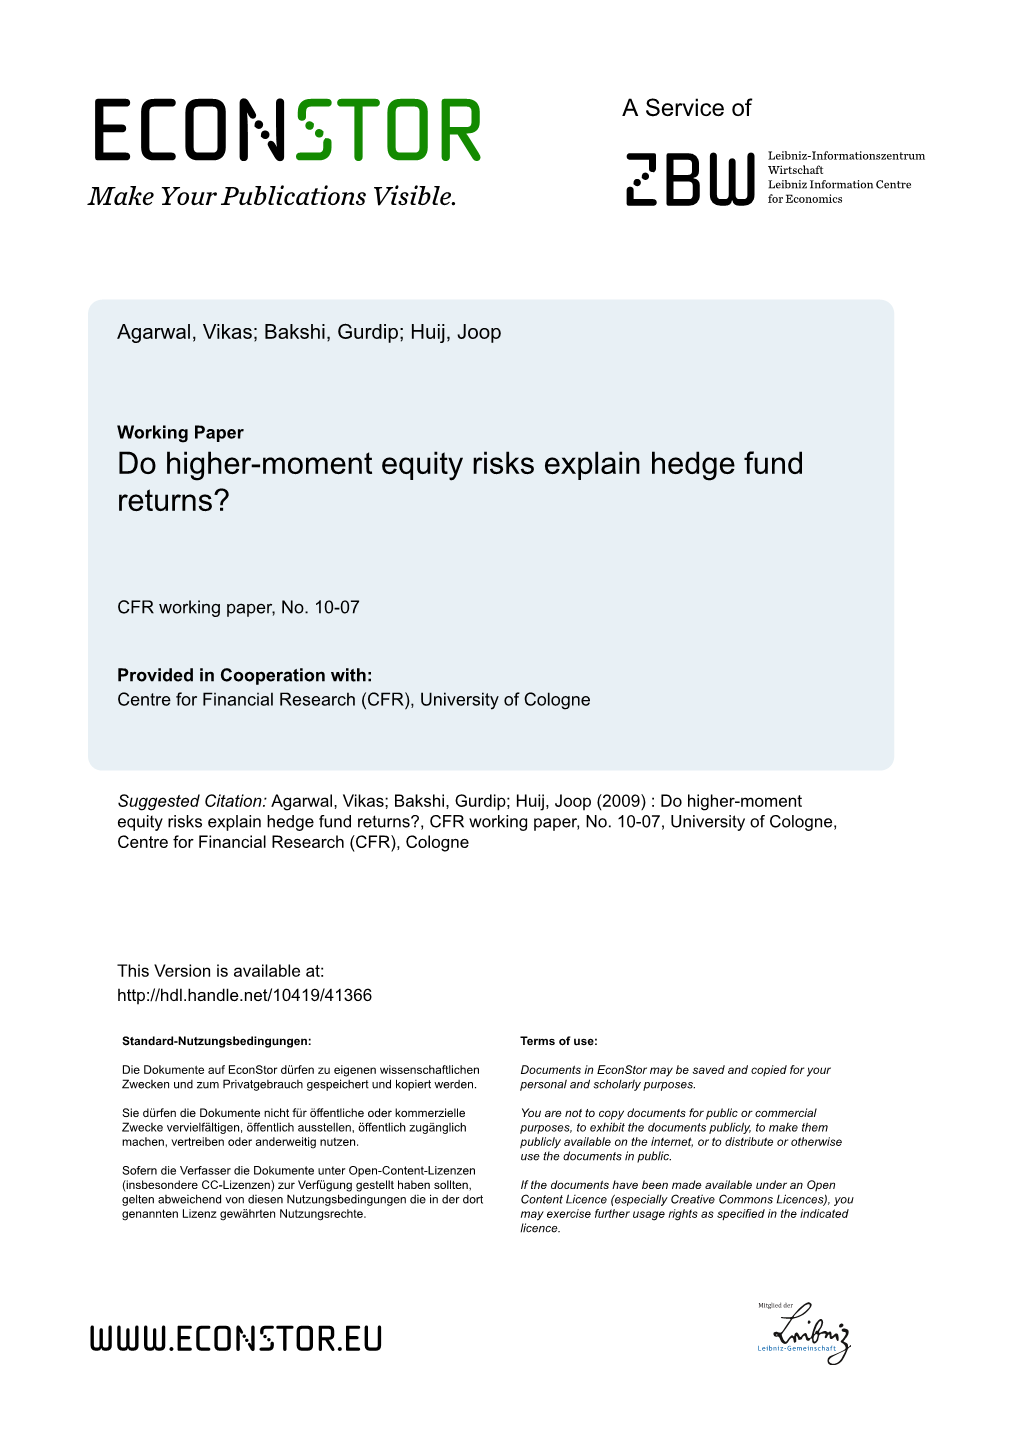 Do Higher-Moment Equity Risks Explain Hedge Fund Returns?